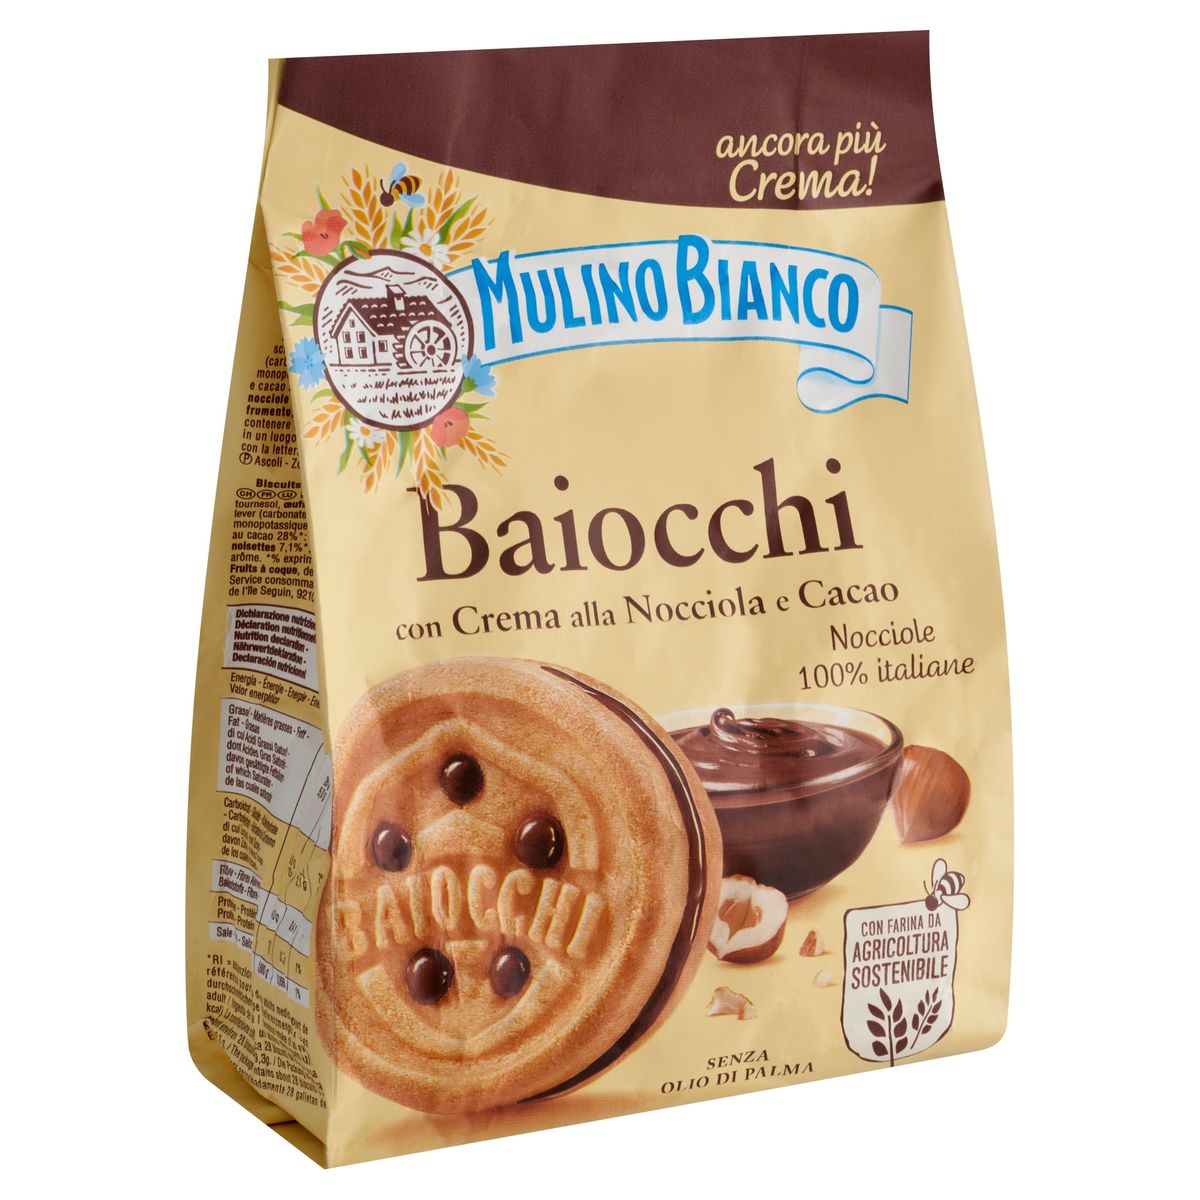 Mulino Bianco Baiocchi Biscuits Fourrage aux Noisettes et Cacao 260 g